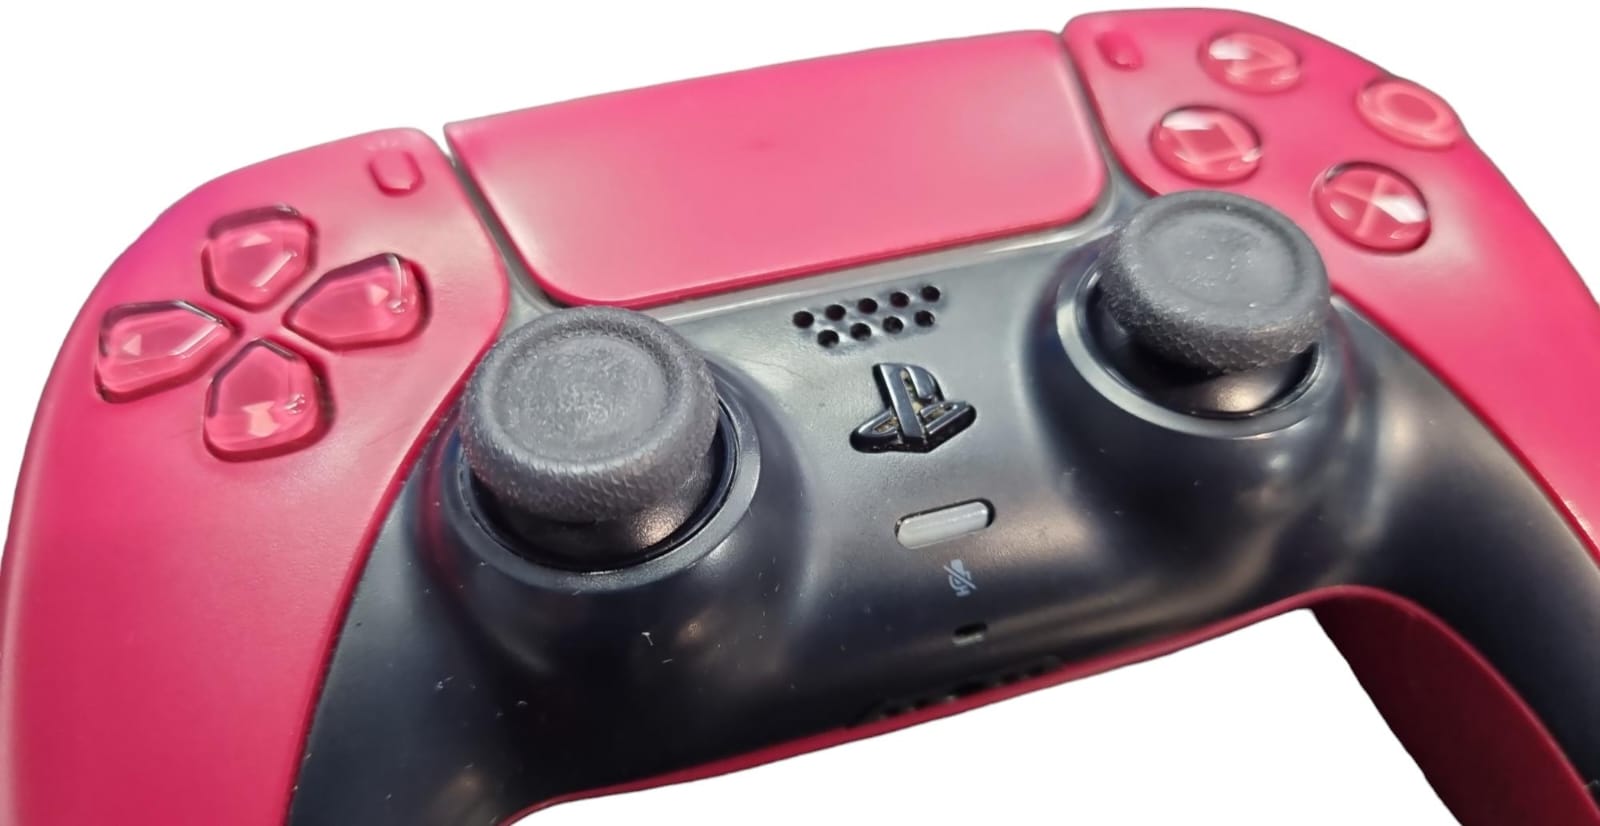 Cosmic Red Playstation 5 - Dual Sense Controller - No Box